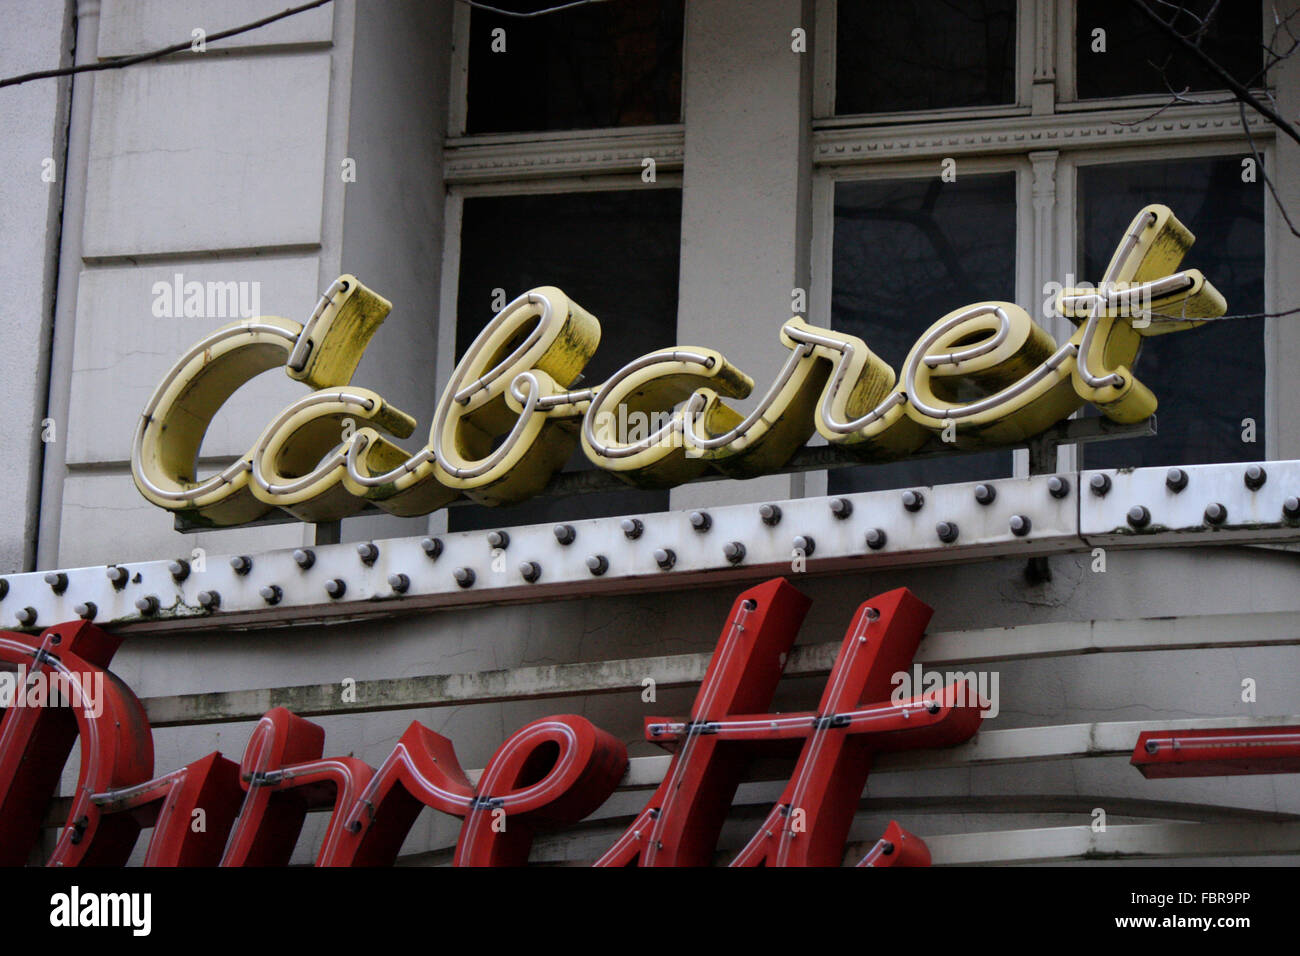 Markenname: 'Cabaret', Berlin. Stock Photo